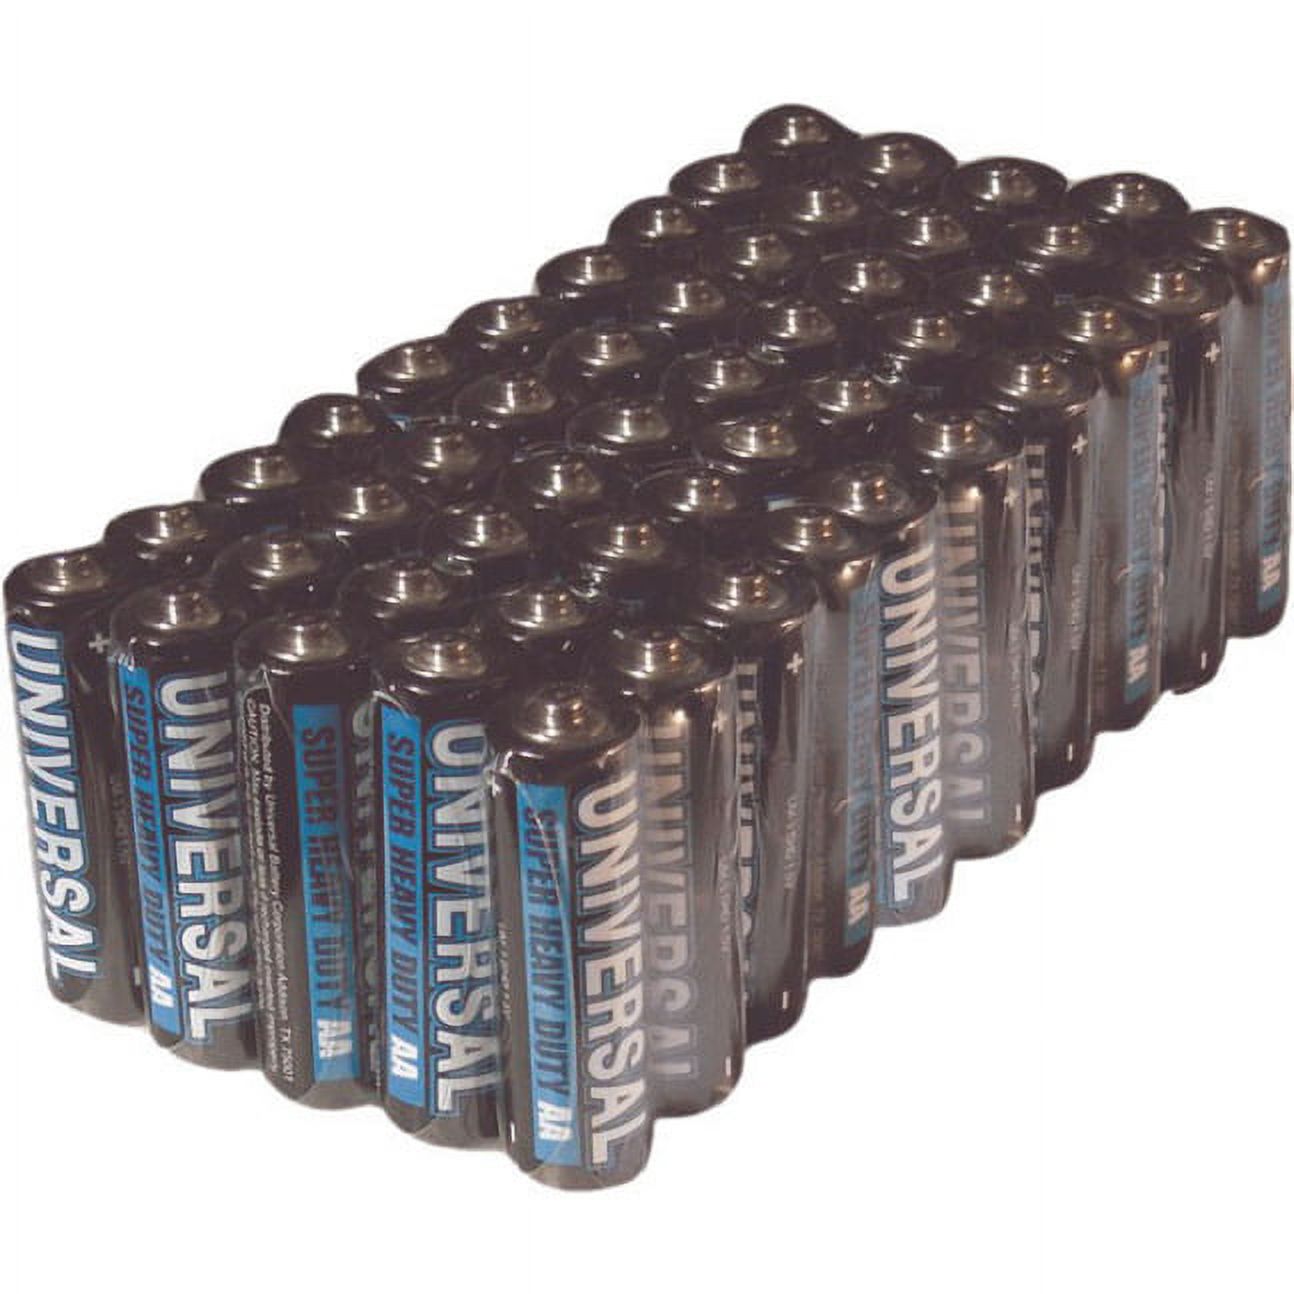 zunicom AA General Purpose Battery - image 1 of 2